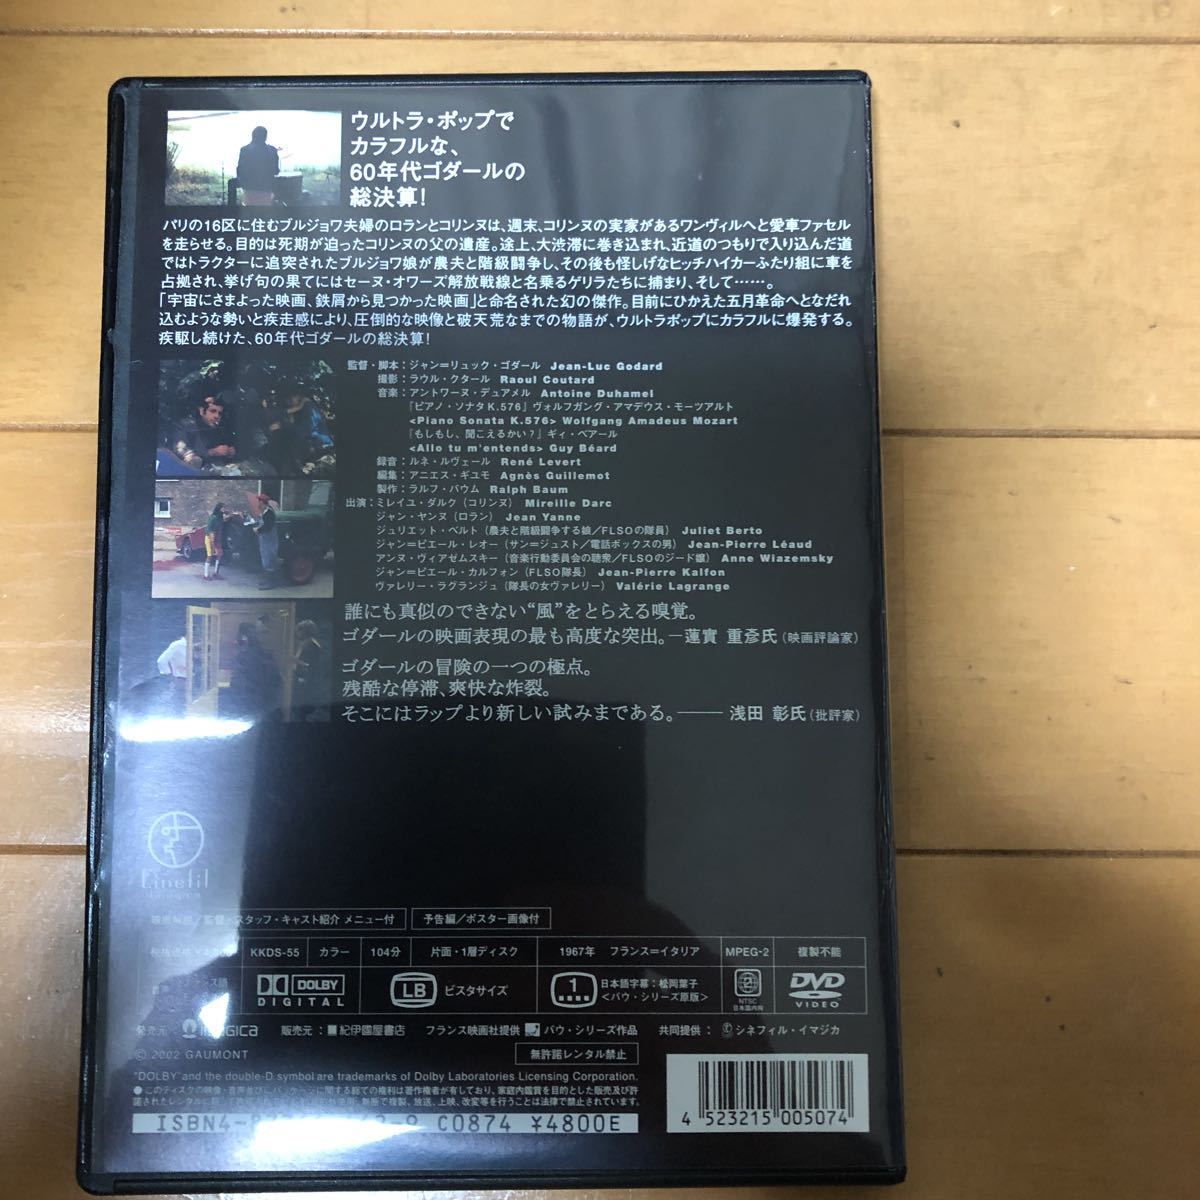 DVD-BOX「ジャン=リュック・ゴダール 映画史 全8章」販売元 紀伊國屋